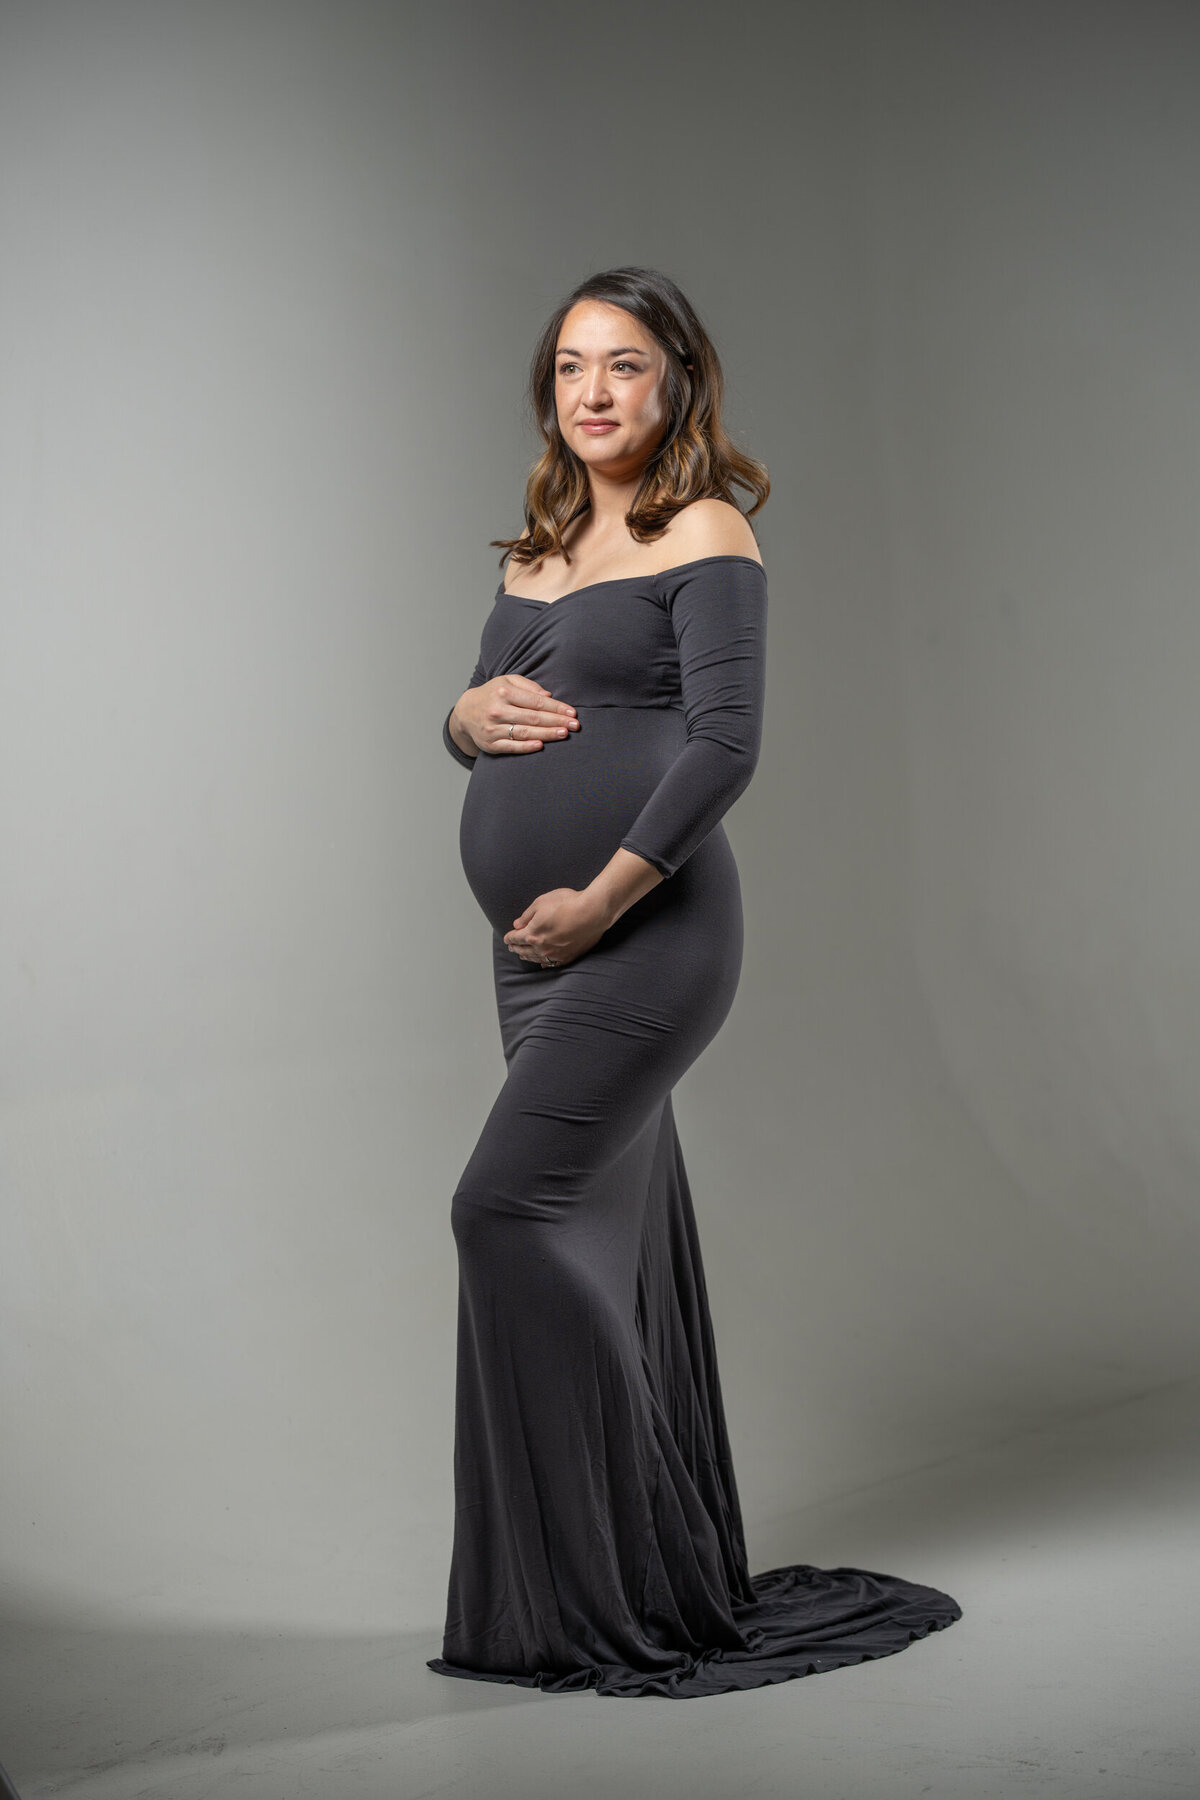 las-vegas-maternity-photographer-3